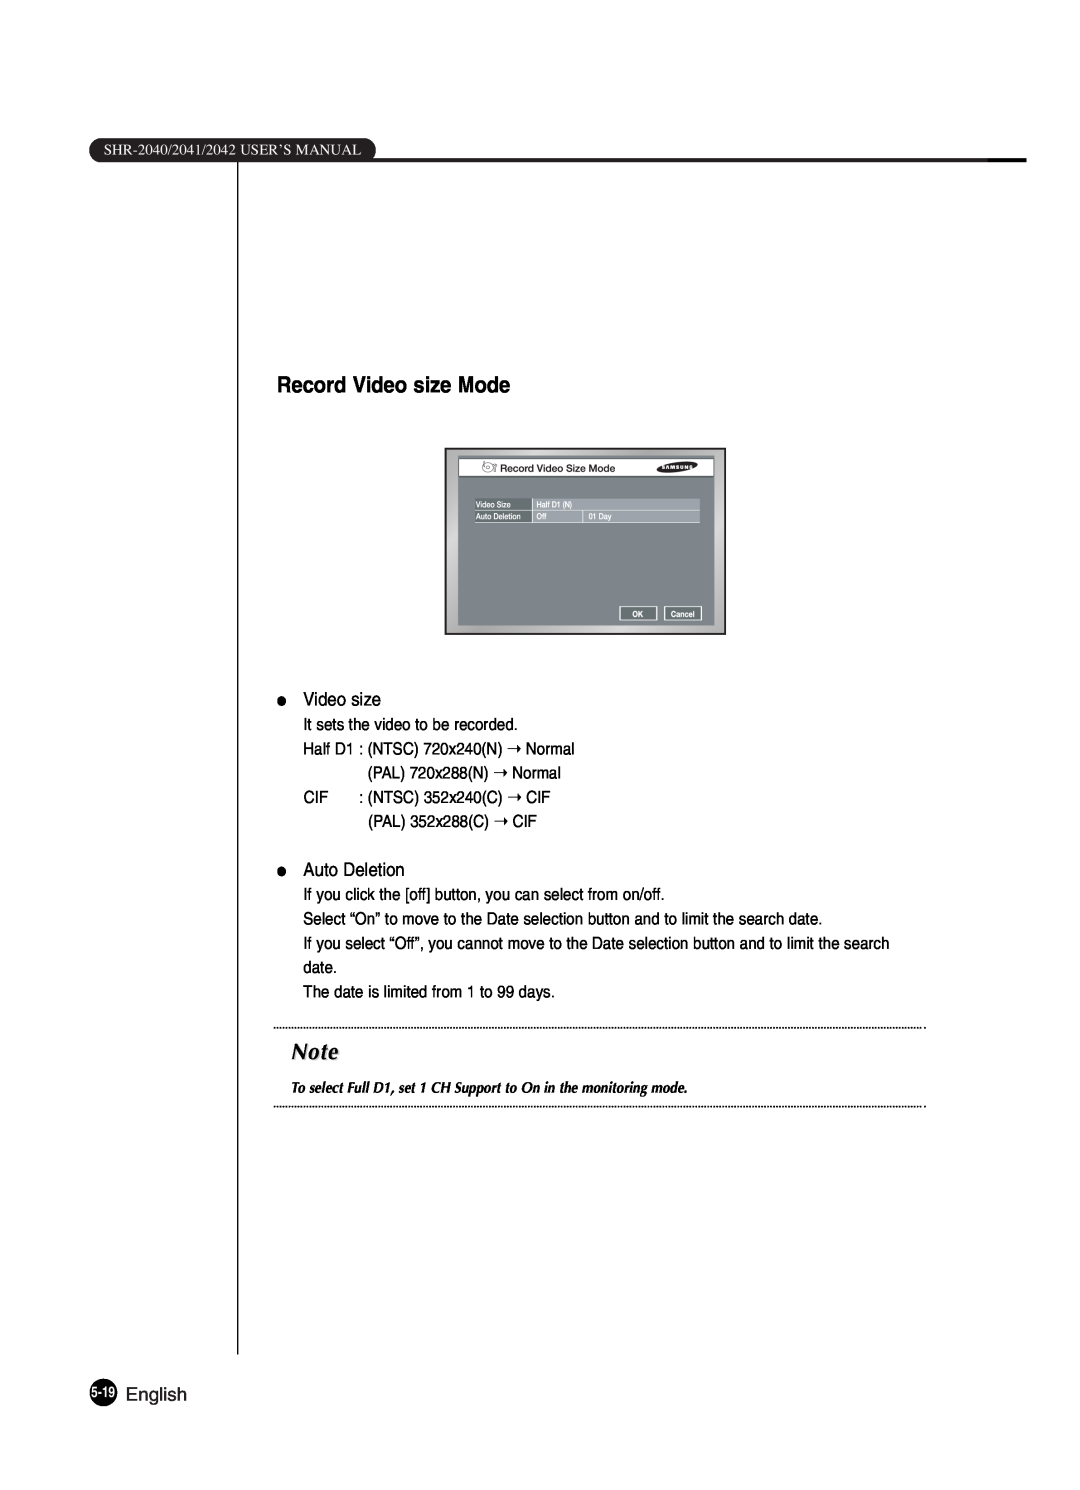 Samsung SHR-2042P250, SHR-2040P250 manual Record Video size Mode, English 